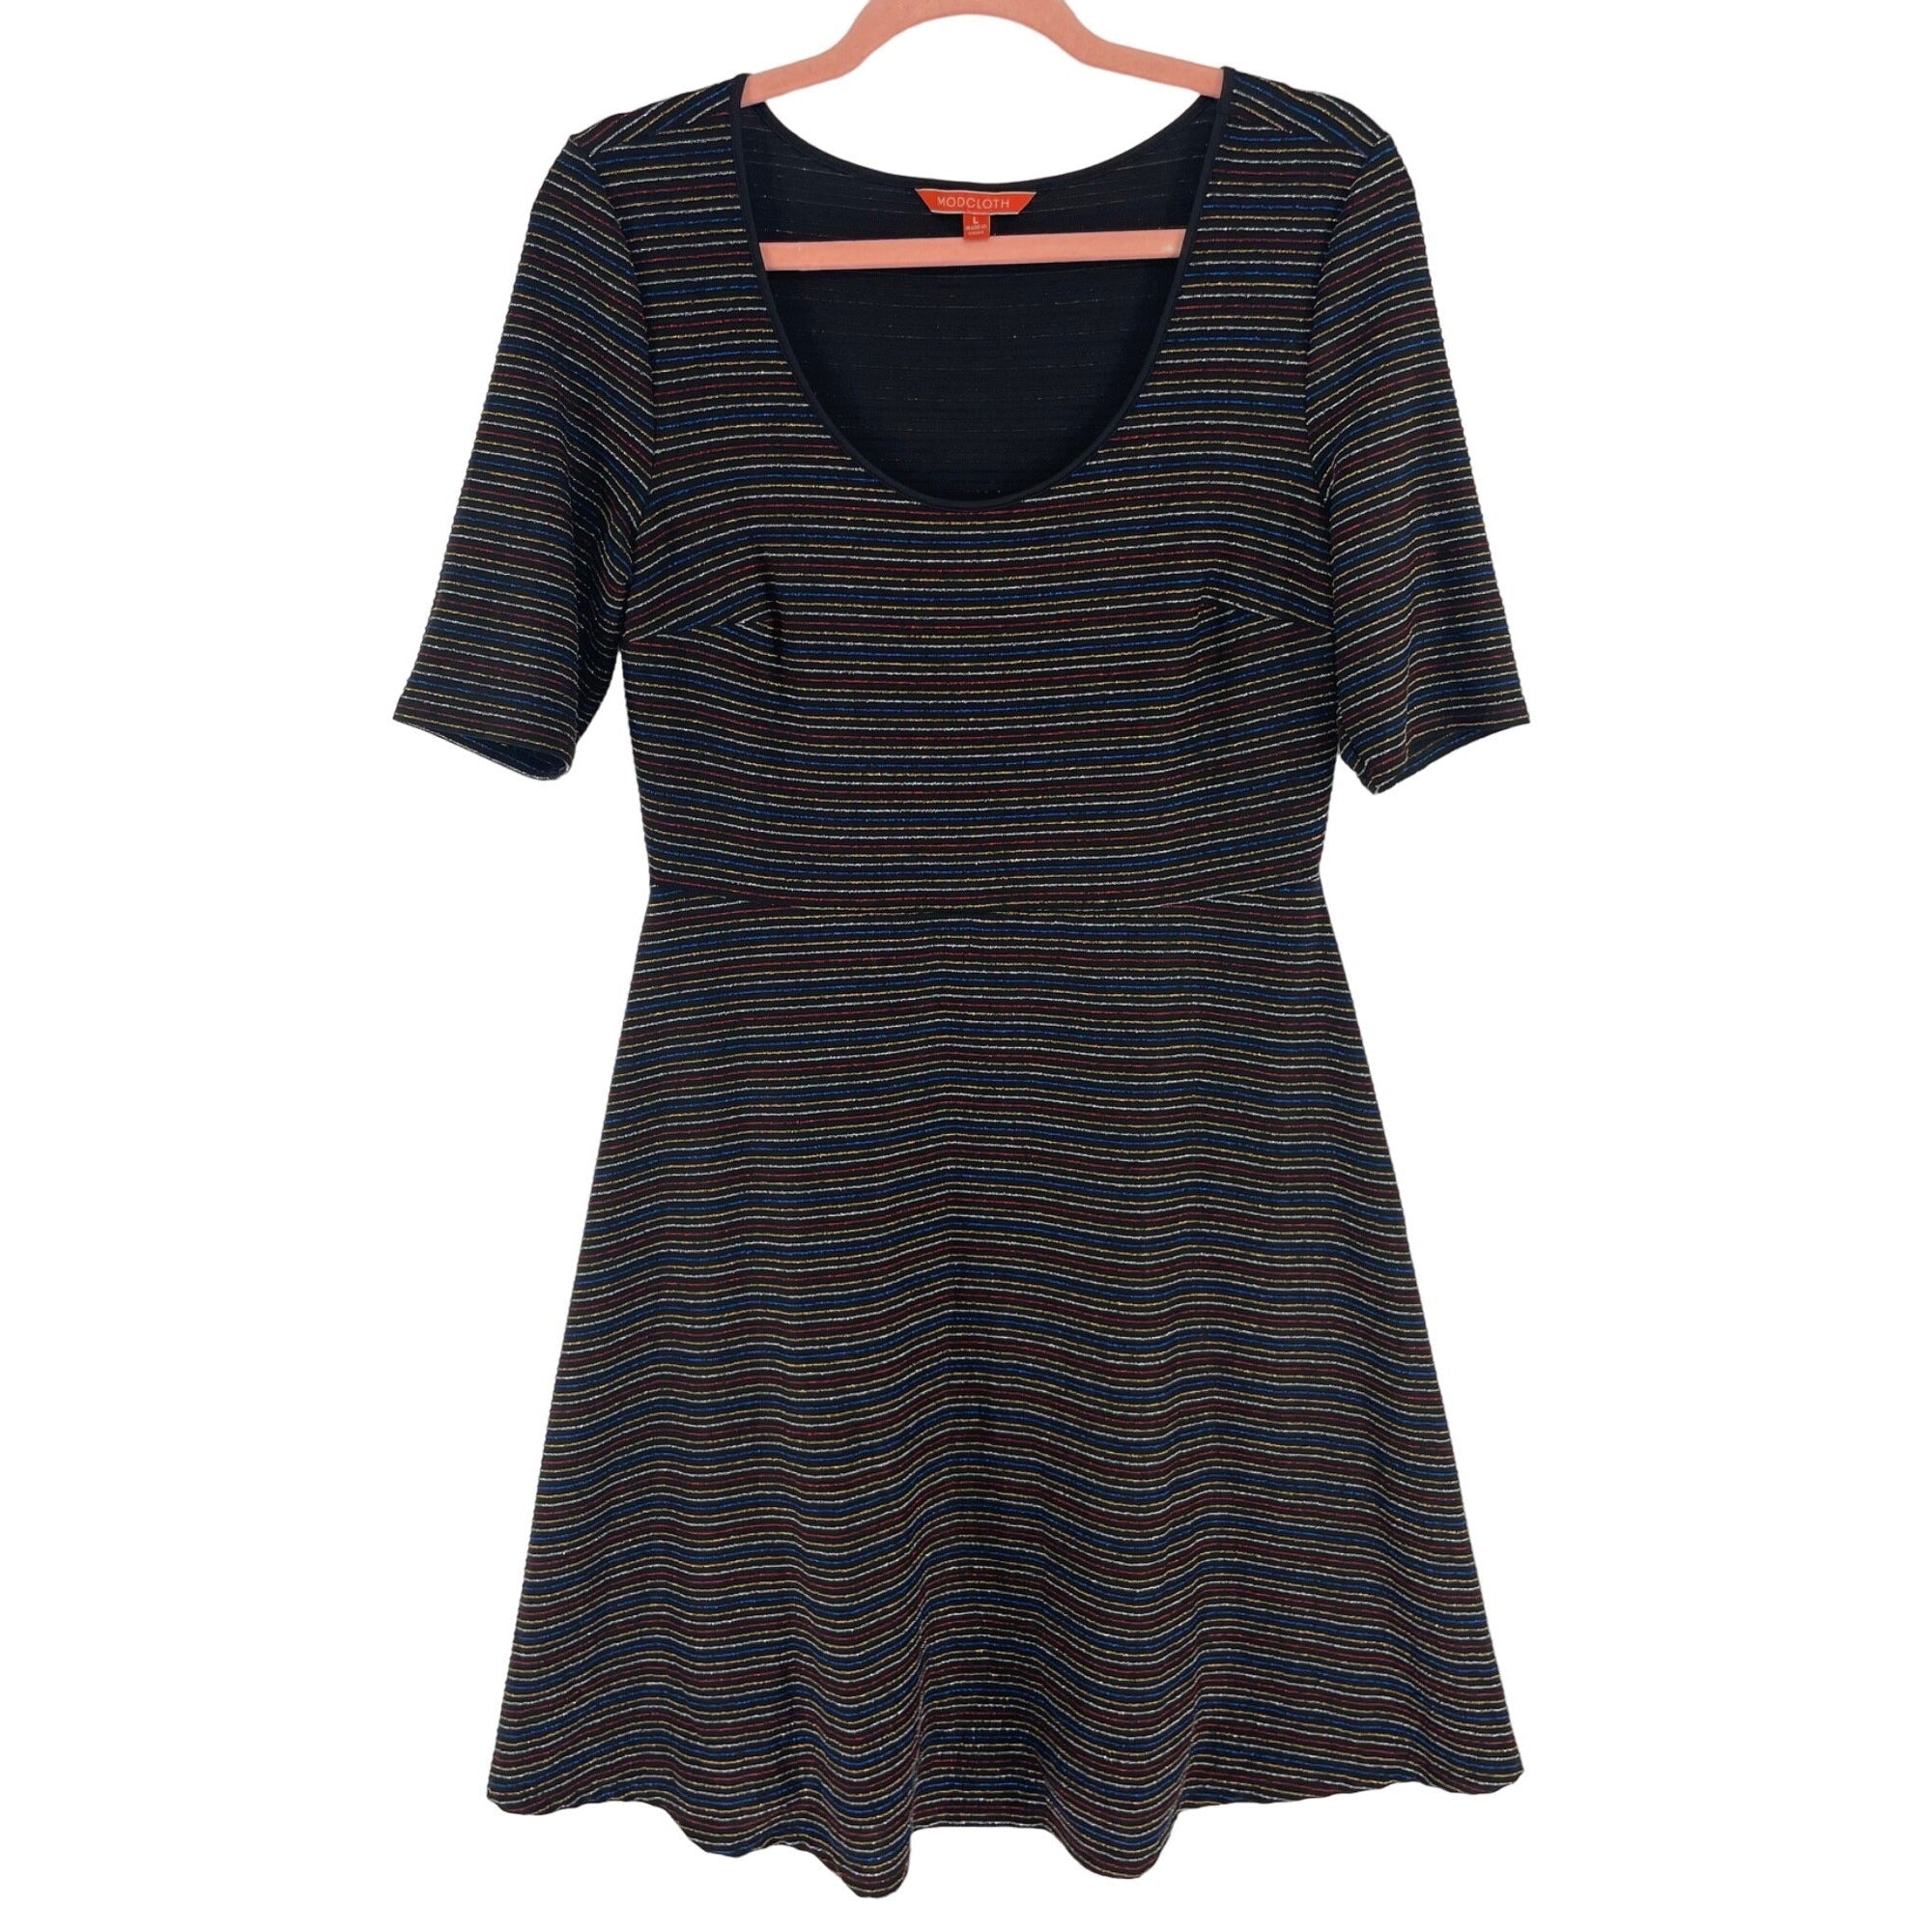 MODCLOTH Women's Size Large Black Dress W/ Sparkly Multi-Colored Stripes